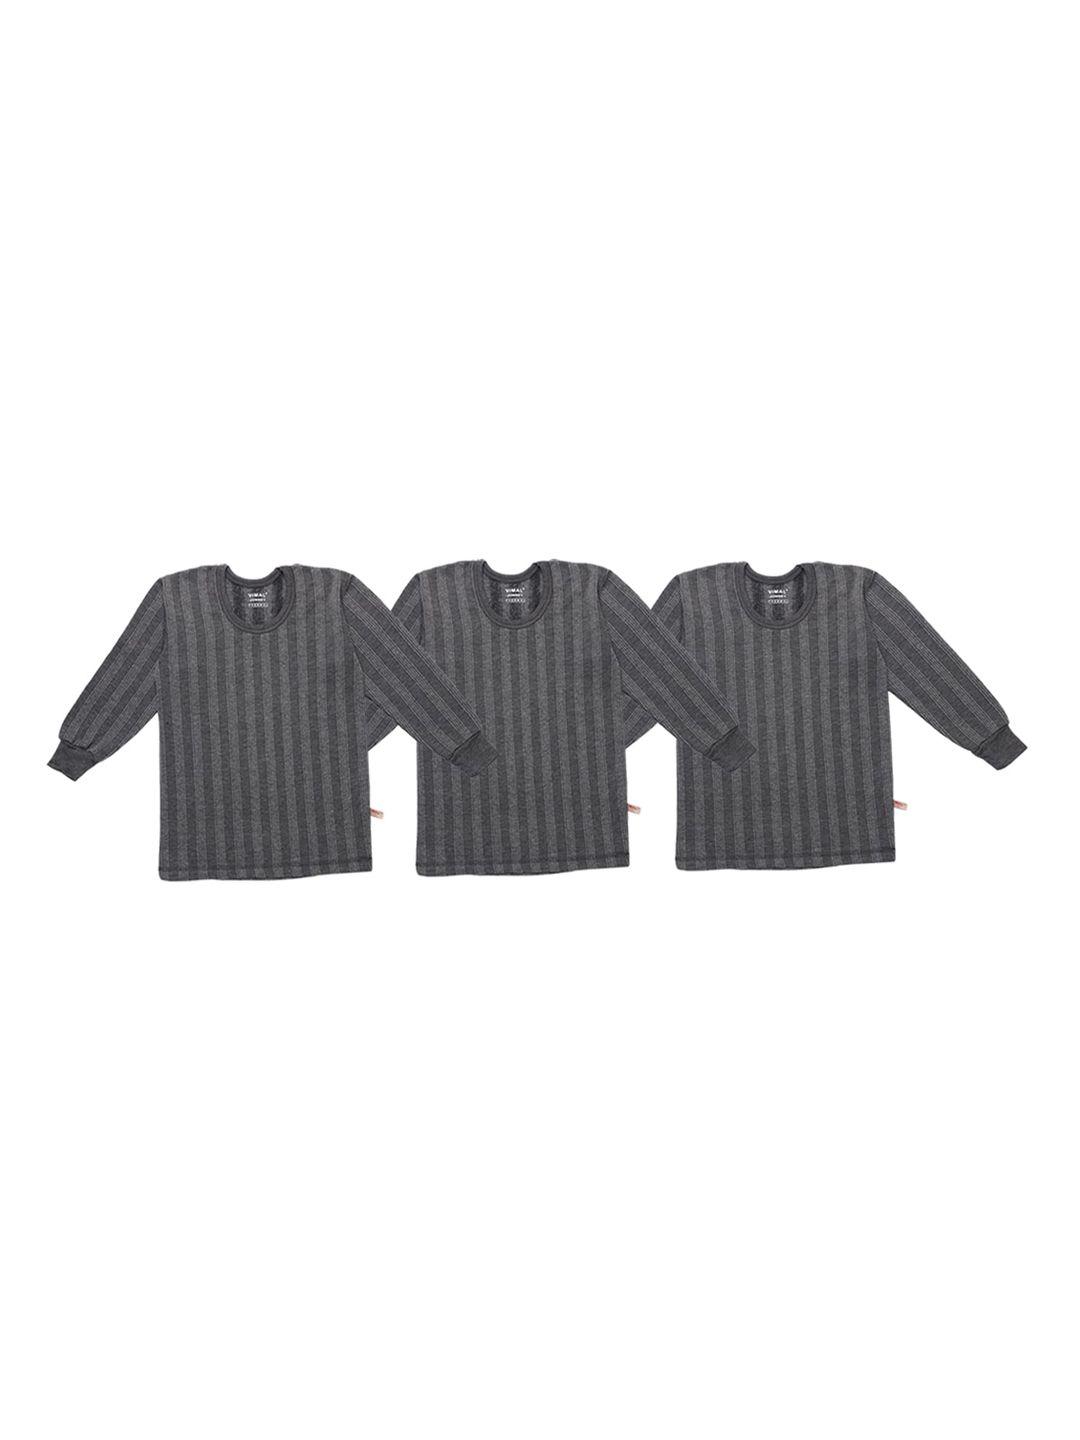 vimal jonney kids pack of 3 grey striped cotton thermal tops